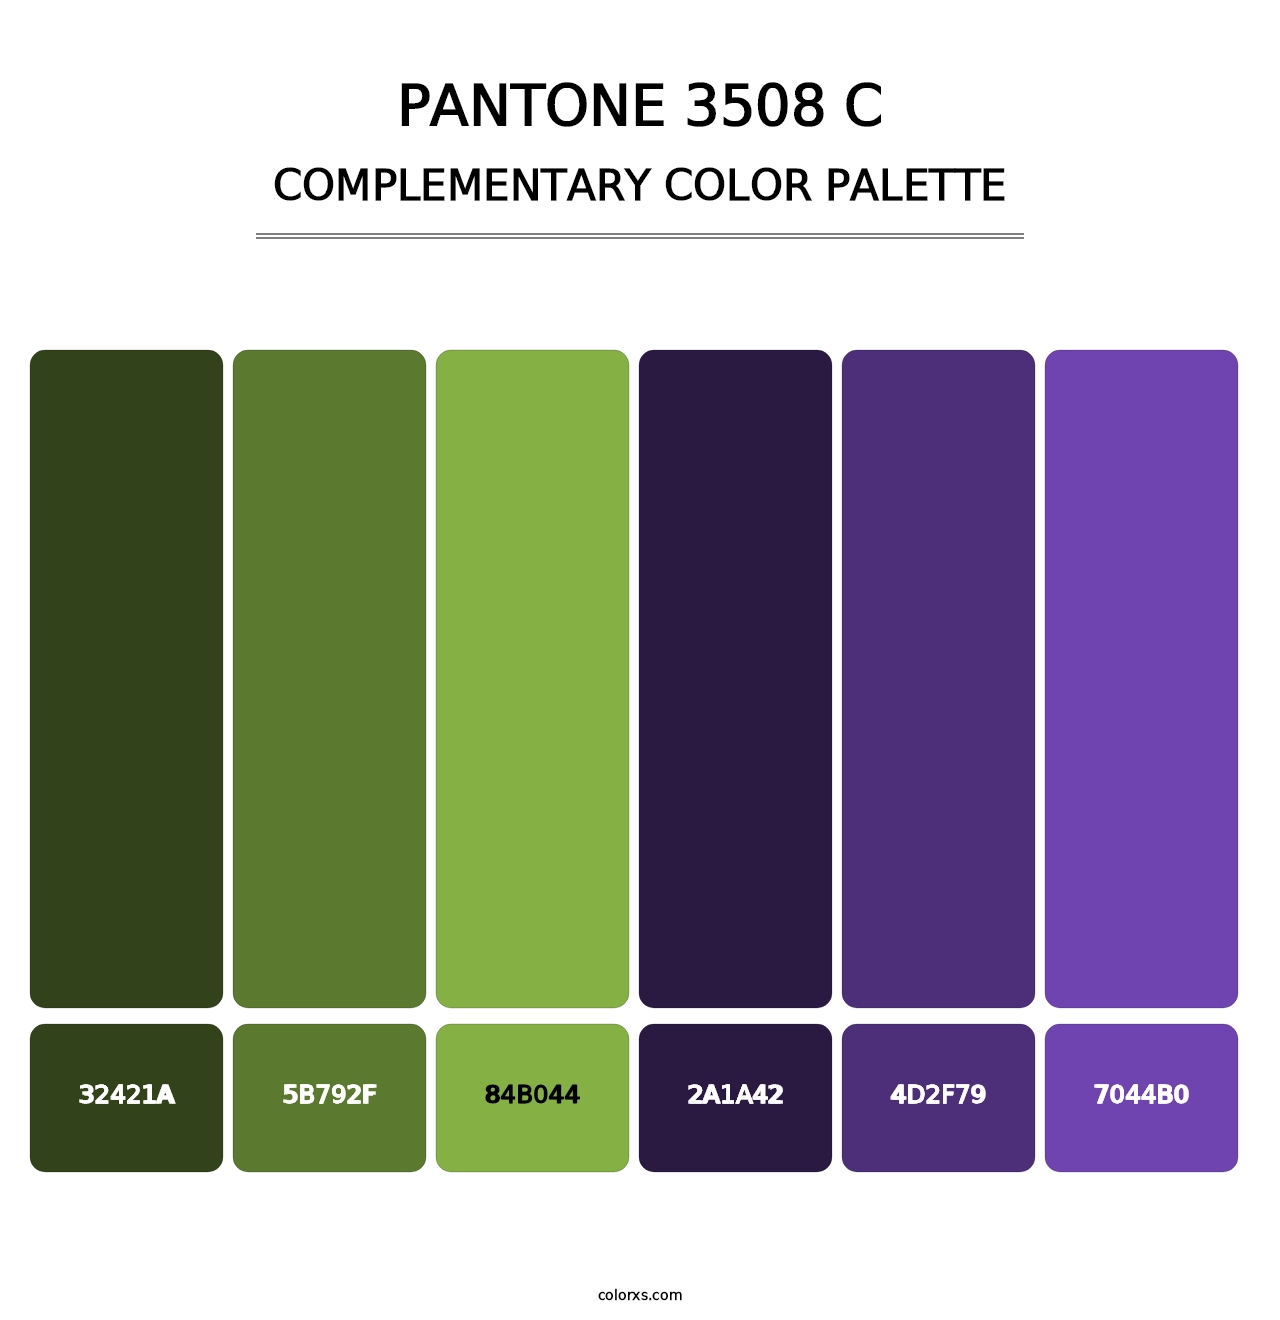 PANTONE 3508 C - Complementary Color Palette